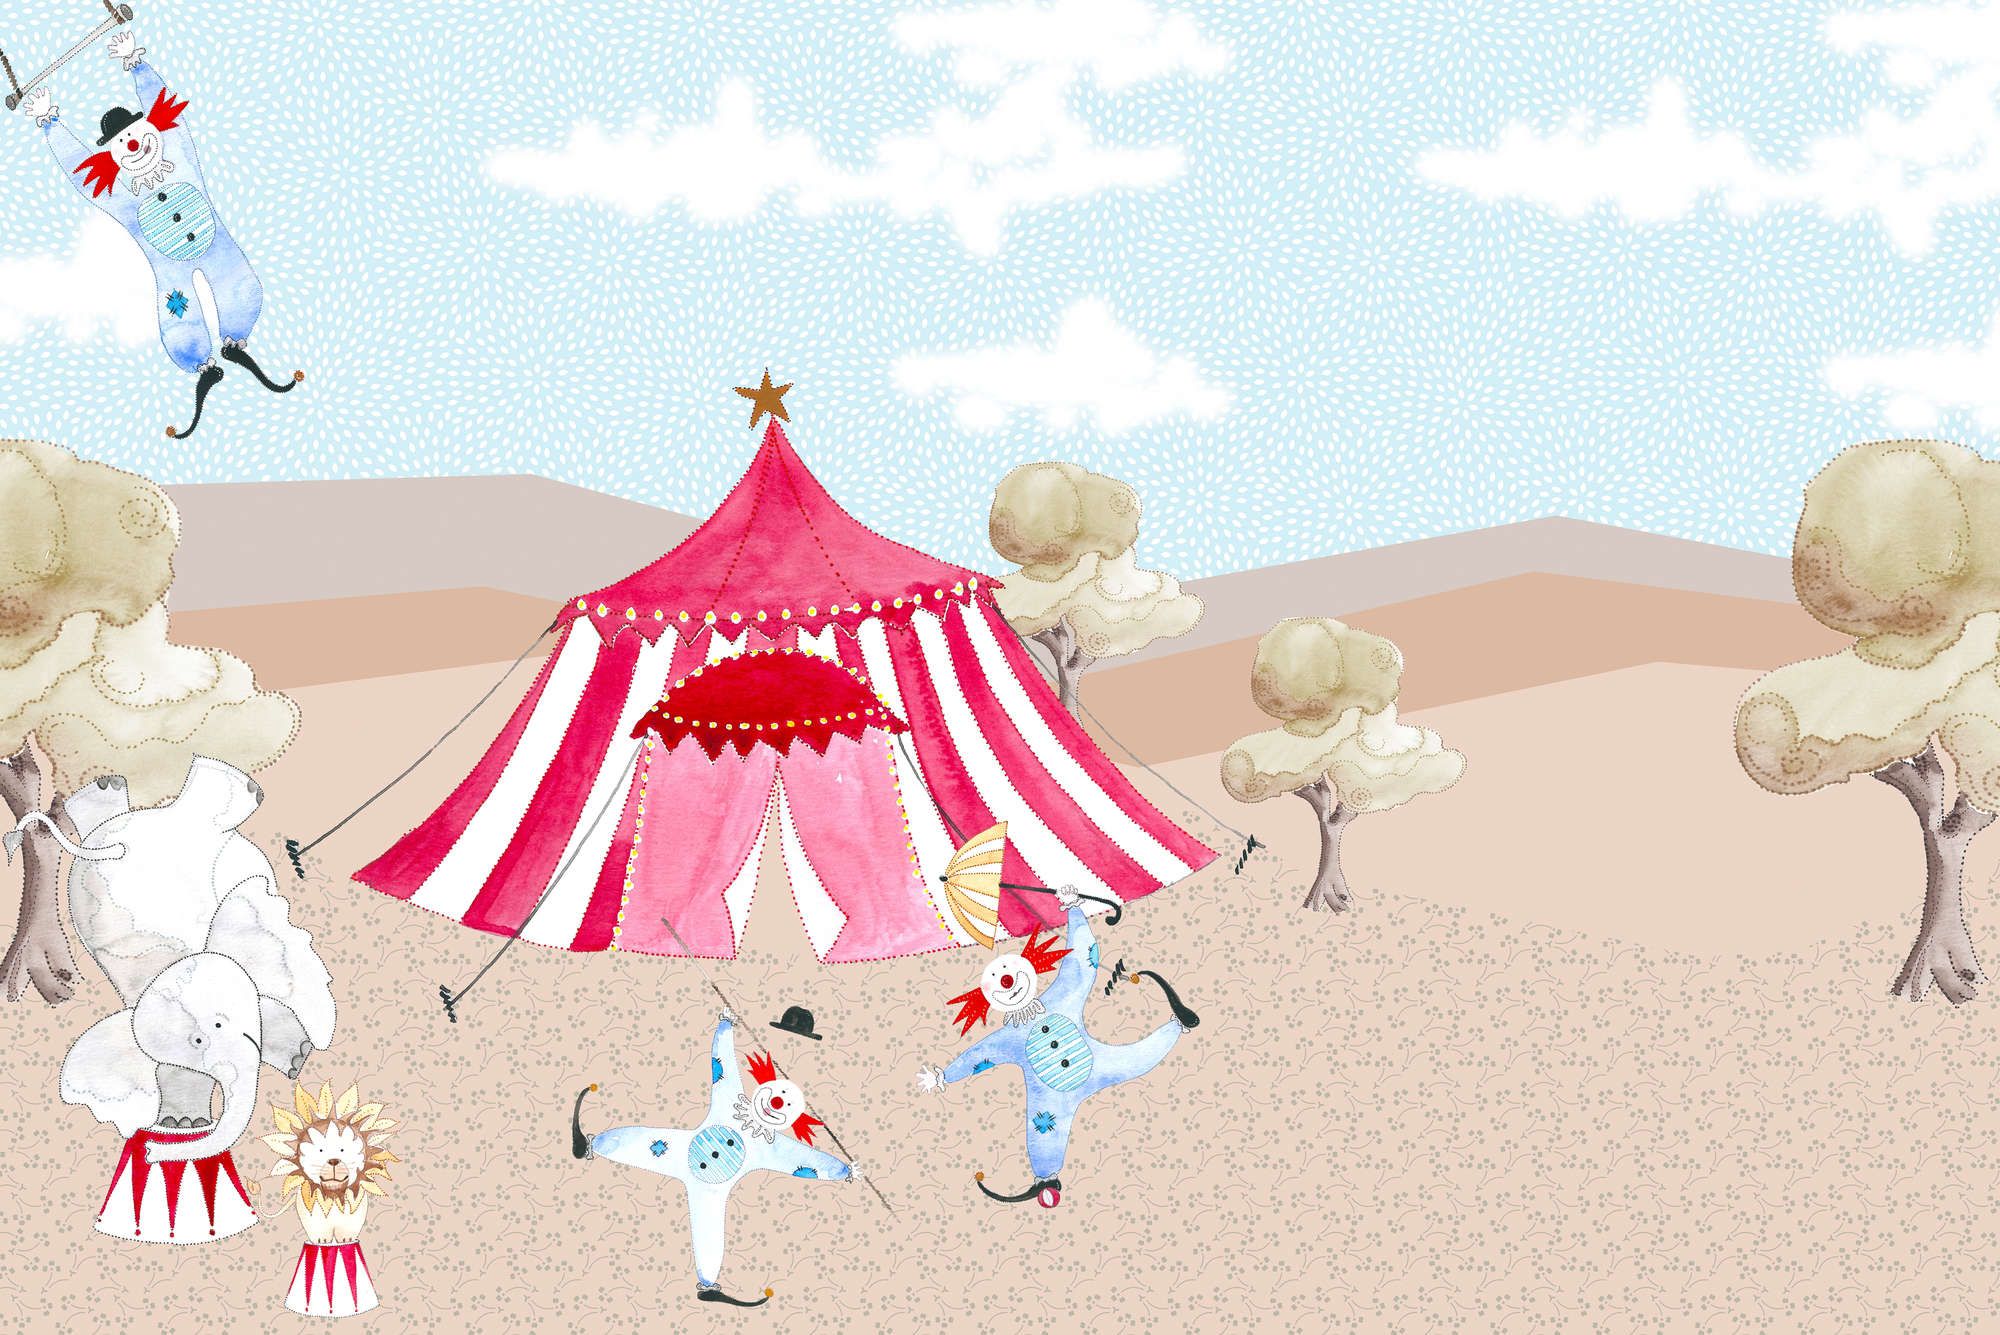             Papel pintado infantil Dibujo de carpa de circo con artistas en tejido no tejido liso mate
        